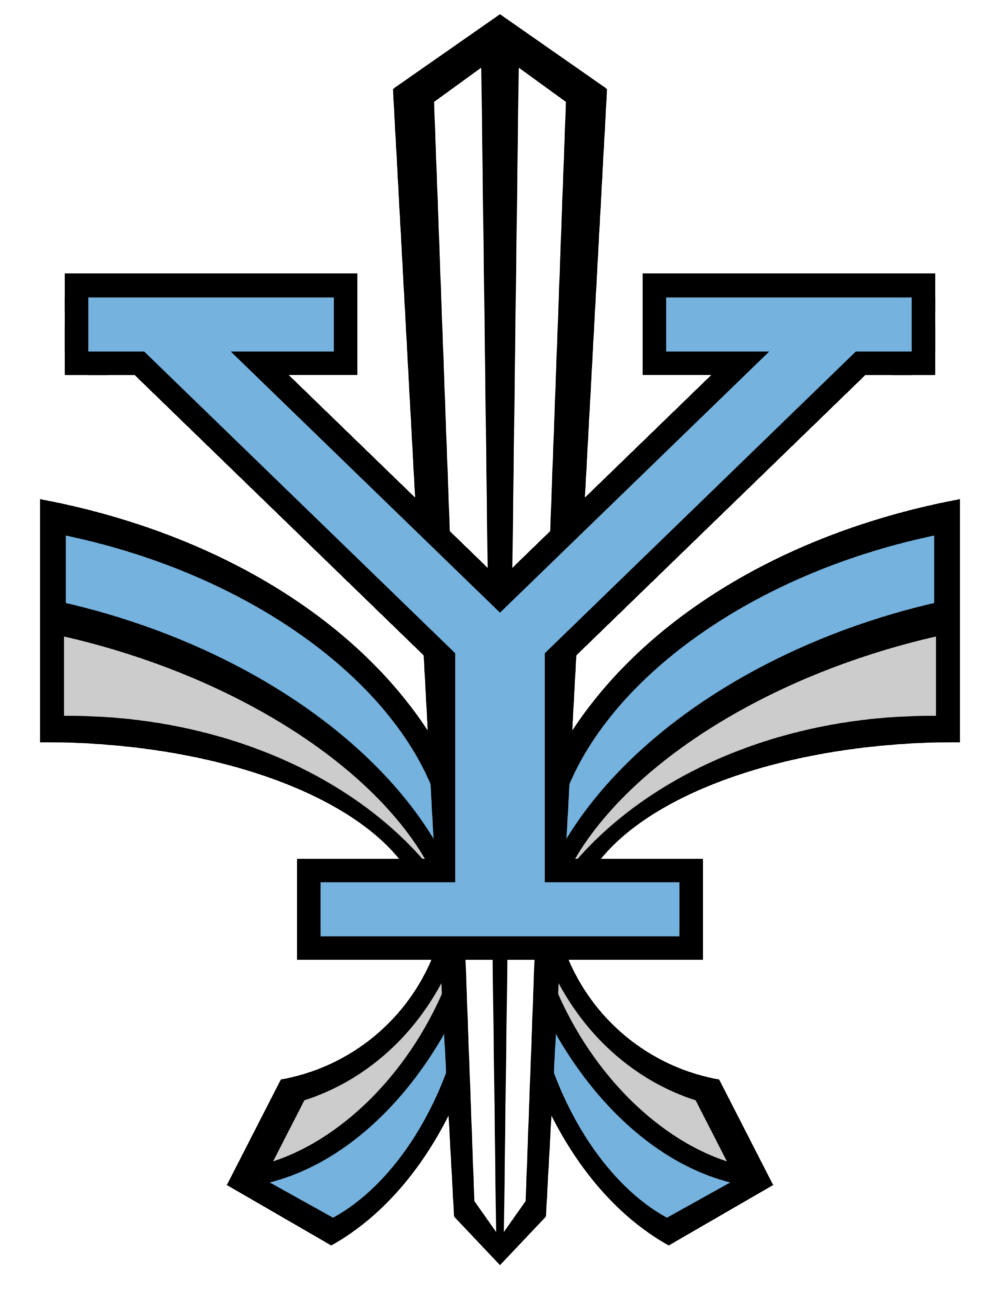 YHS logo